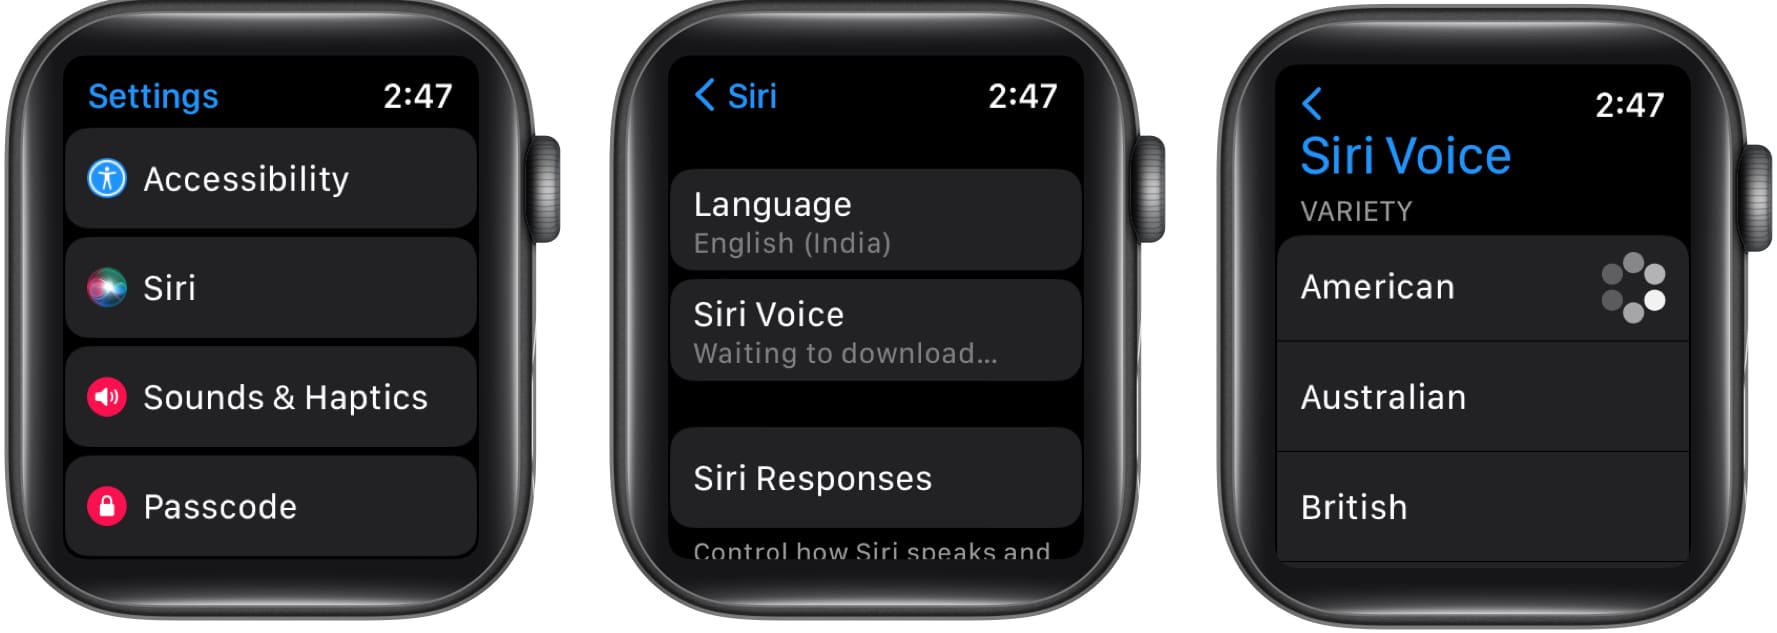 Download Siri Voice on Apple Watch